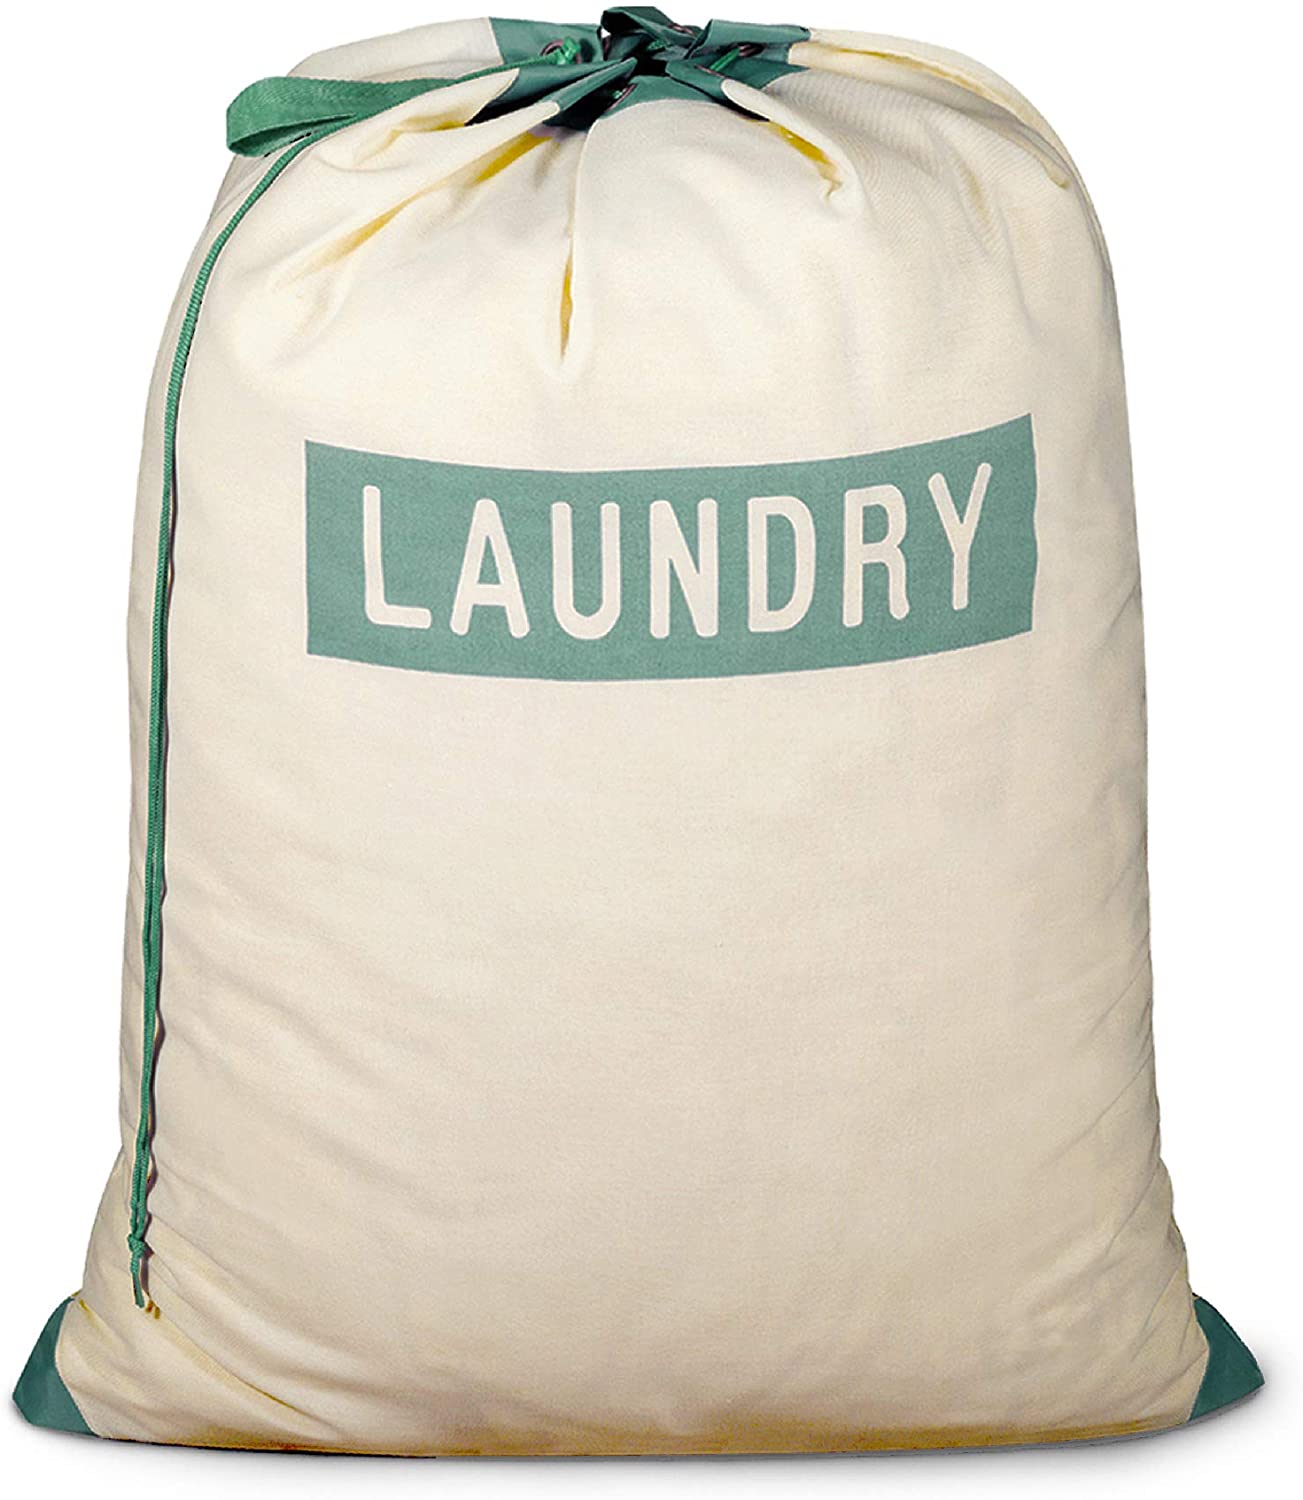 6 X Drawstring Mesh Laundry Bag Storage Wash Clothes Hamper Heavy